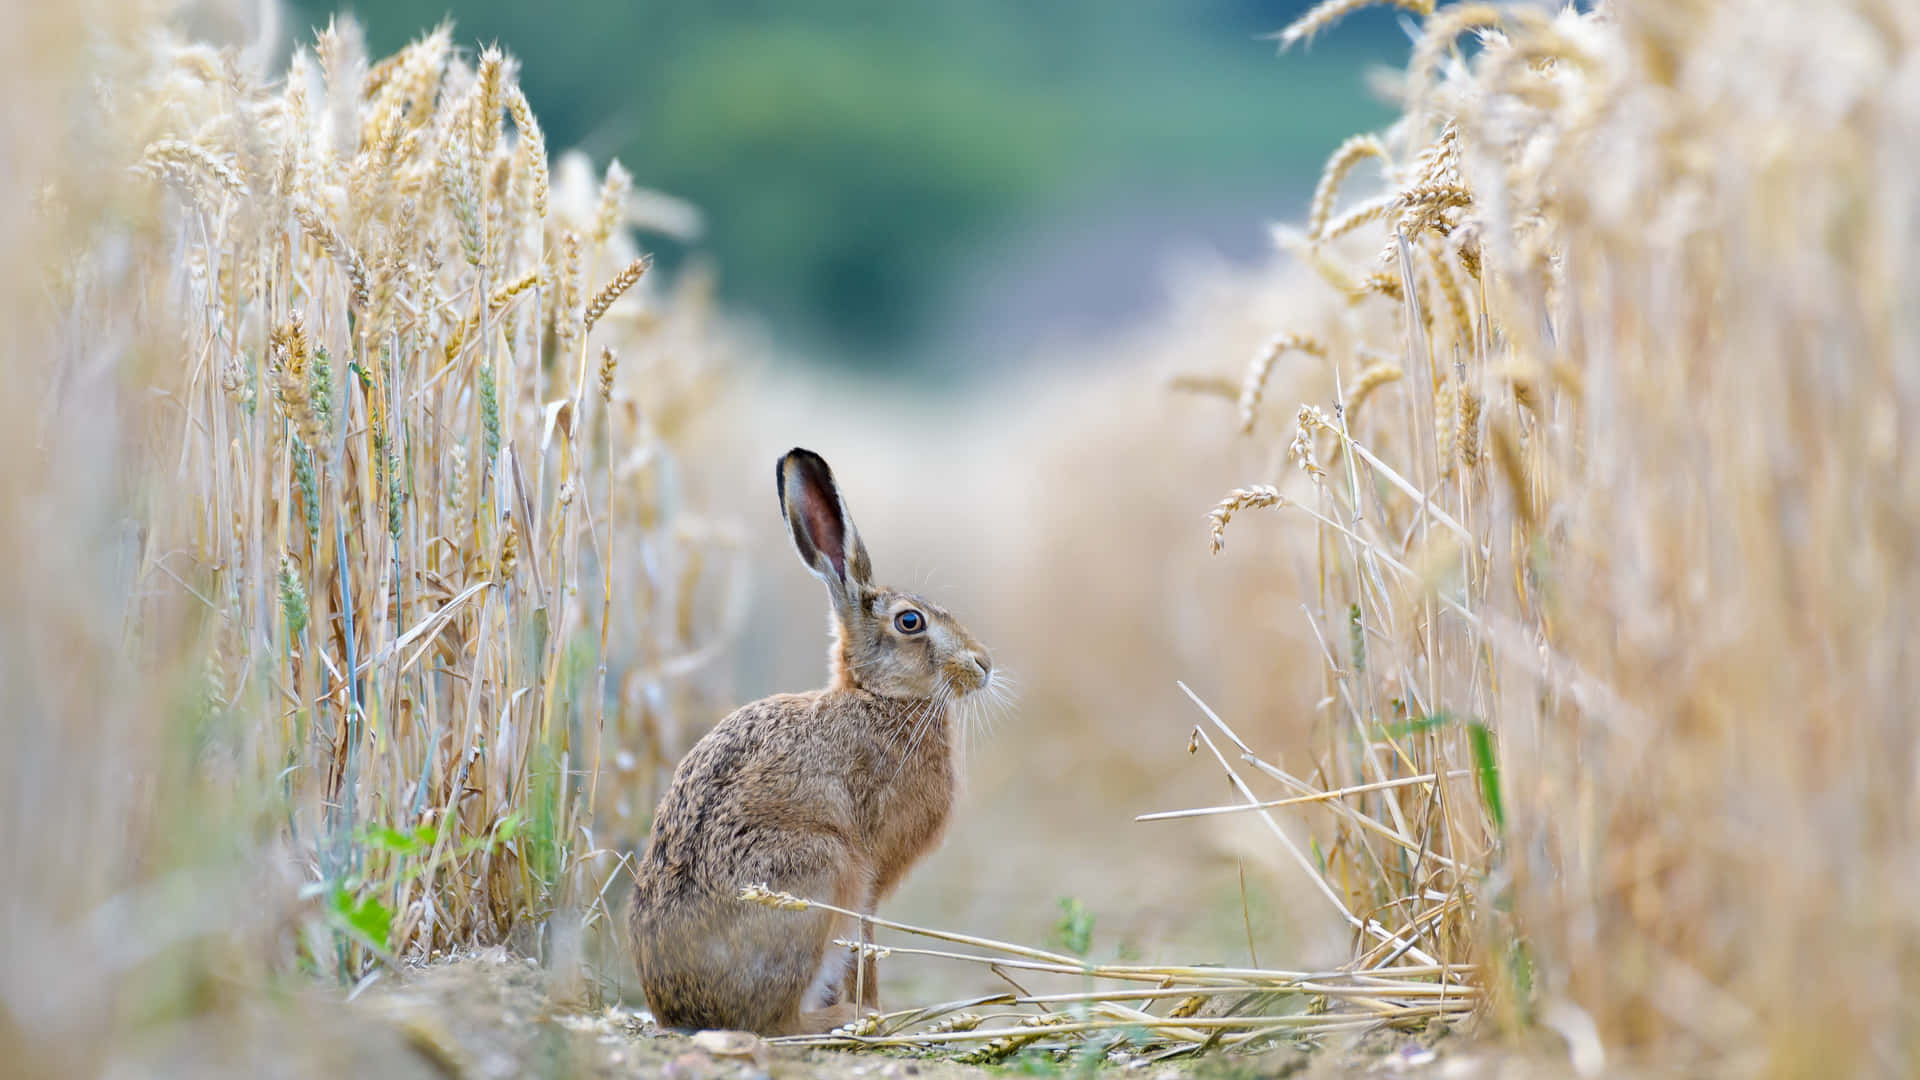 Cottontail Rabbitin Wheat Field Wallpaper